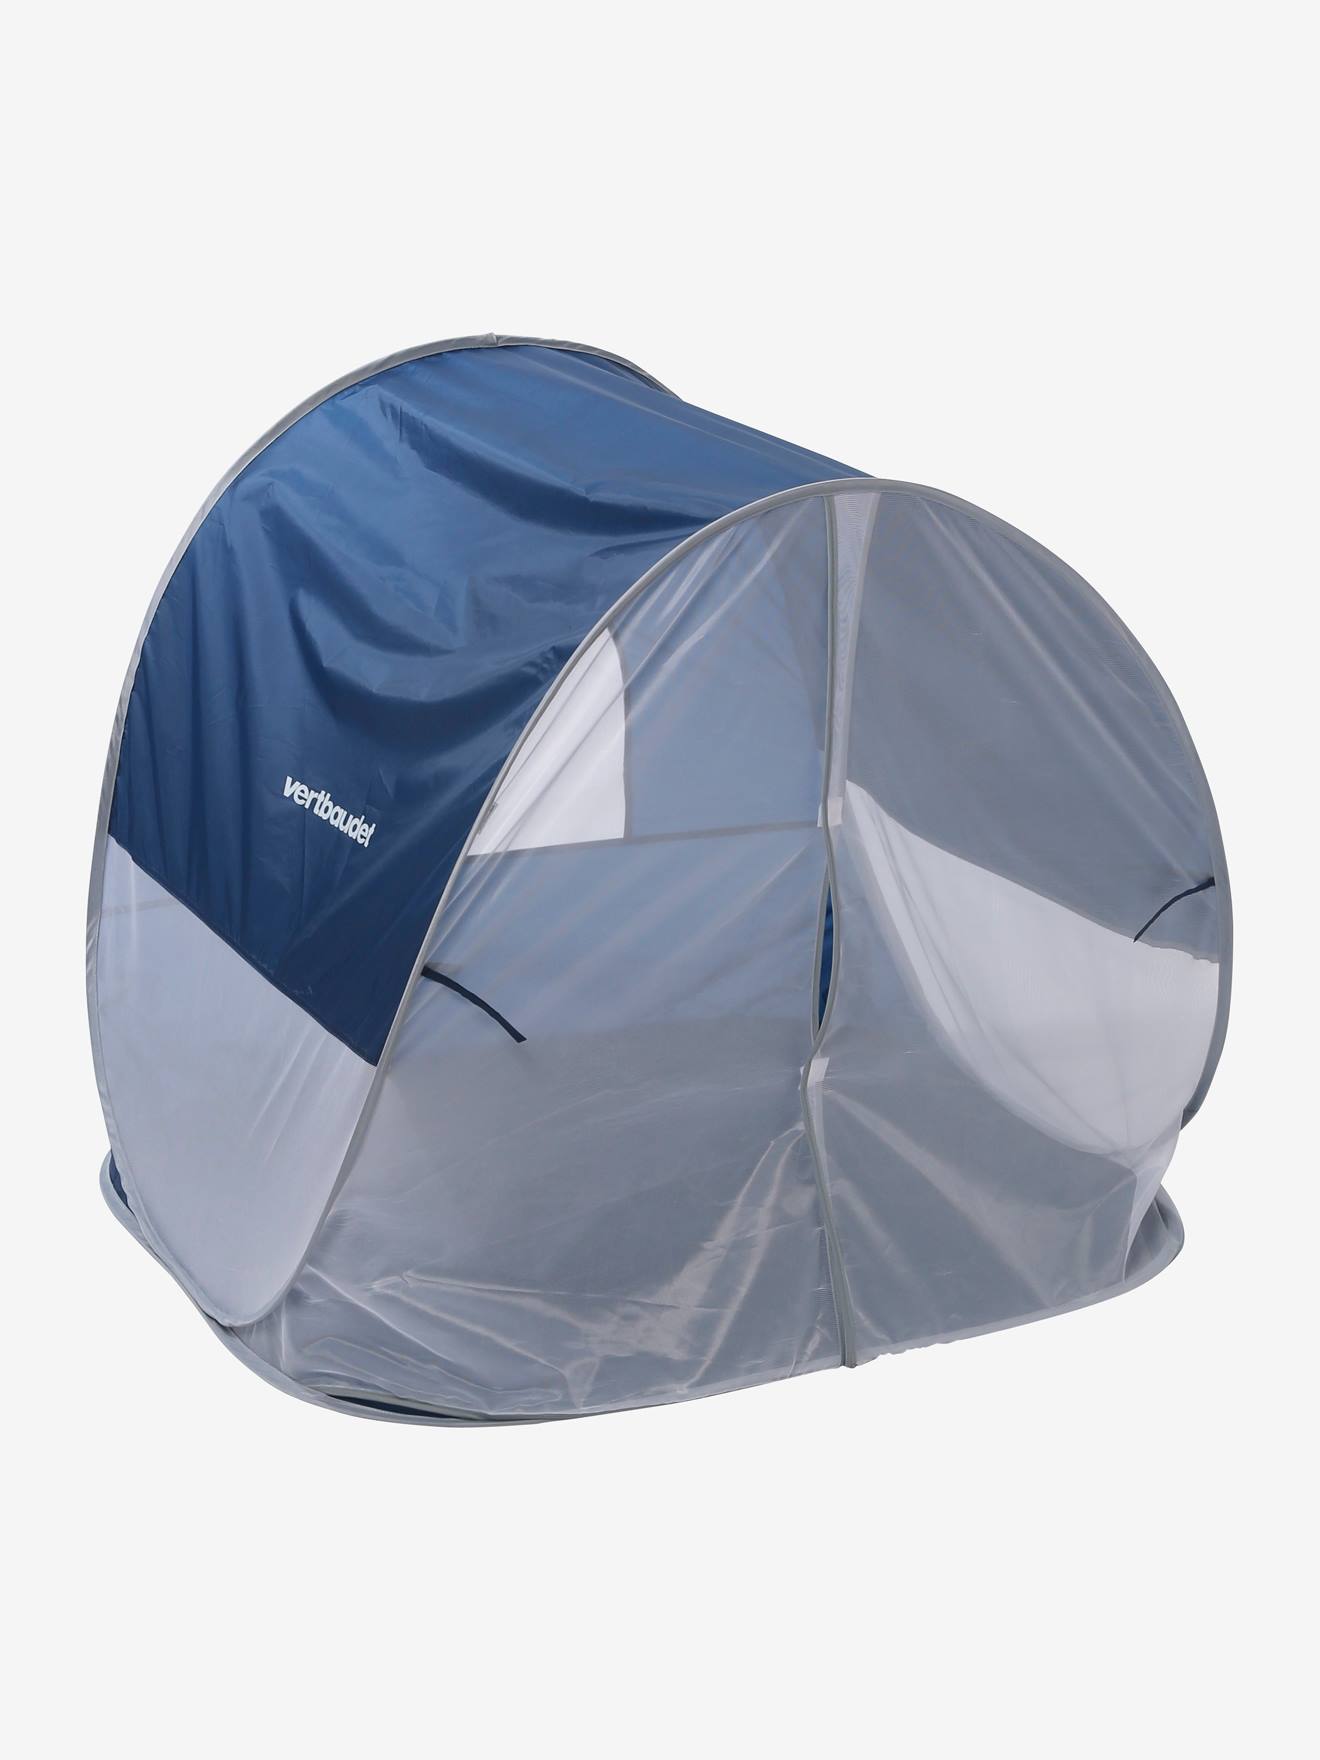 Ultralichte tent met uv-bescherming VERTBAUDET donkerblauw